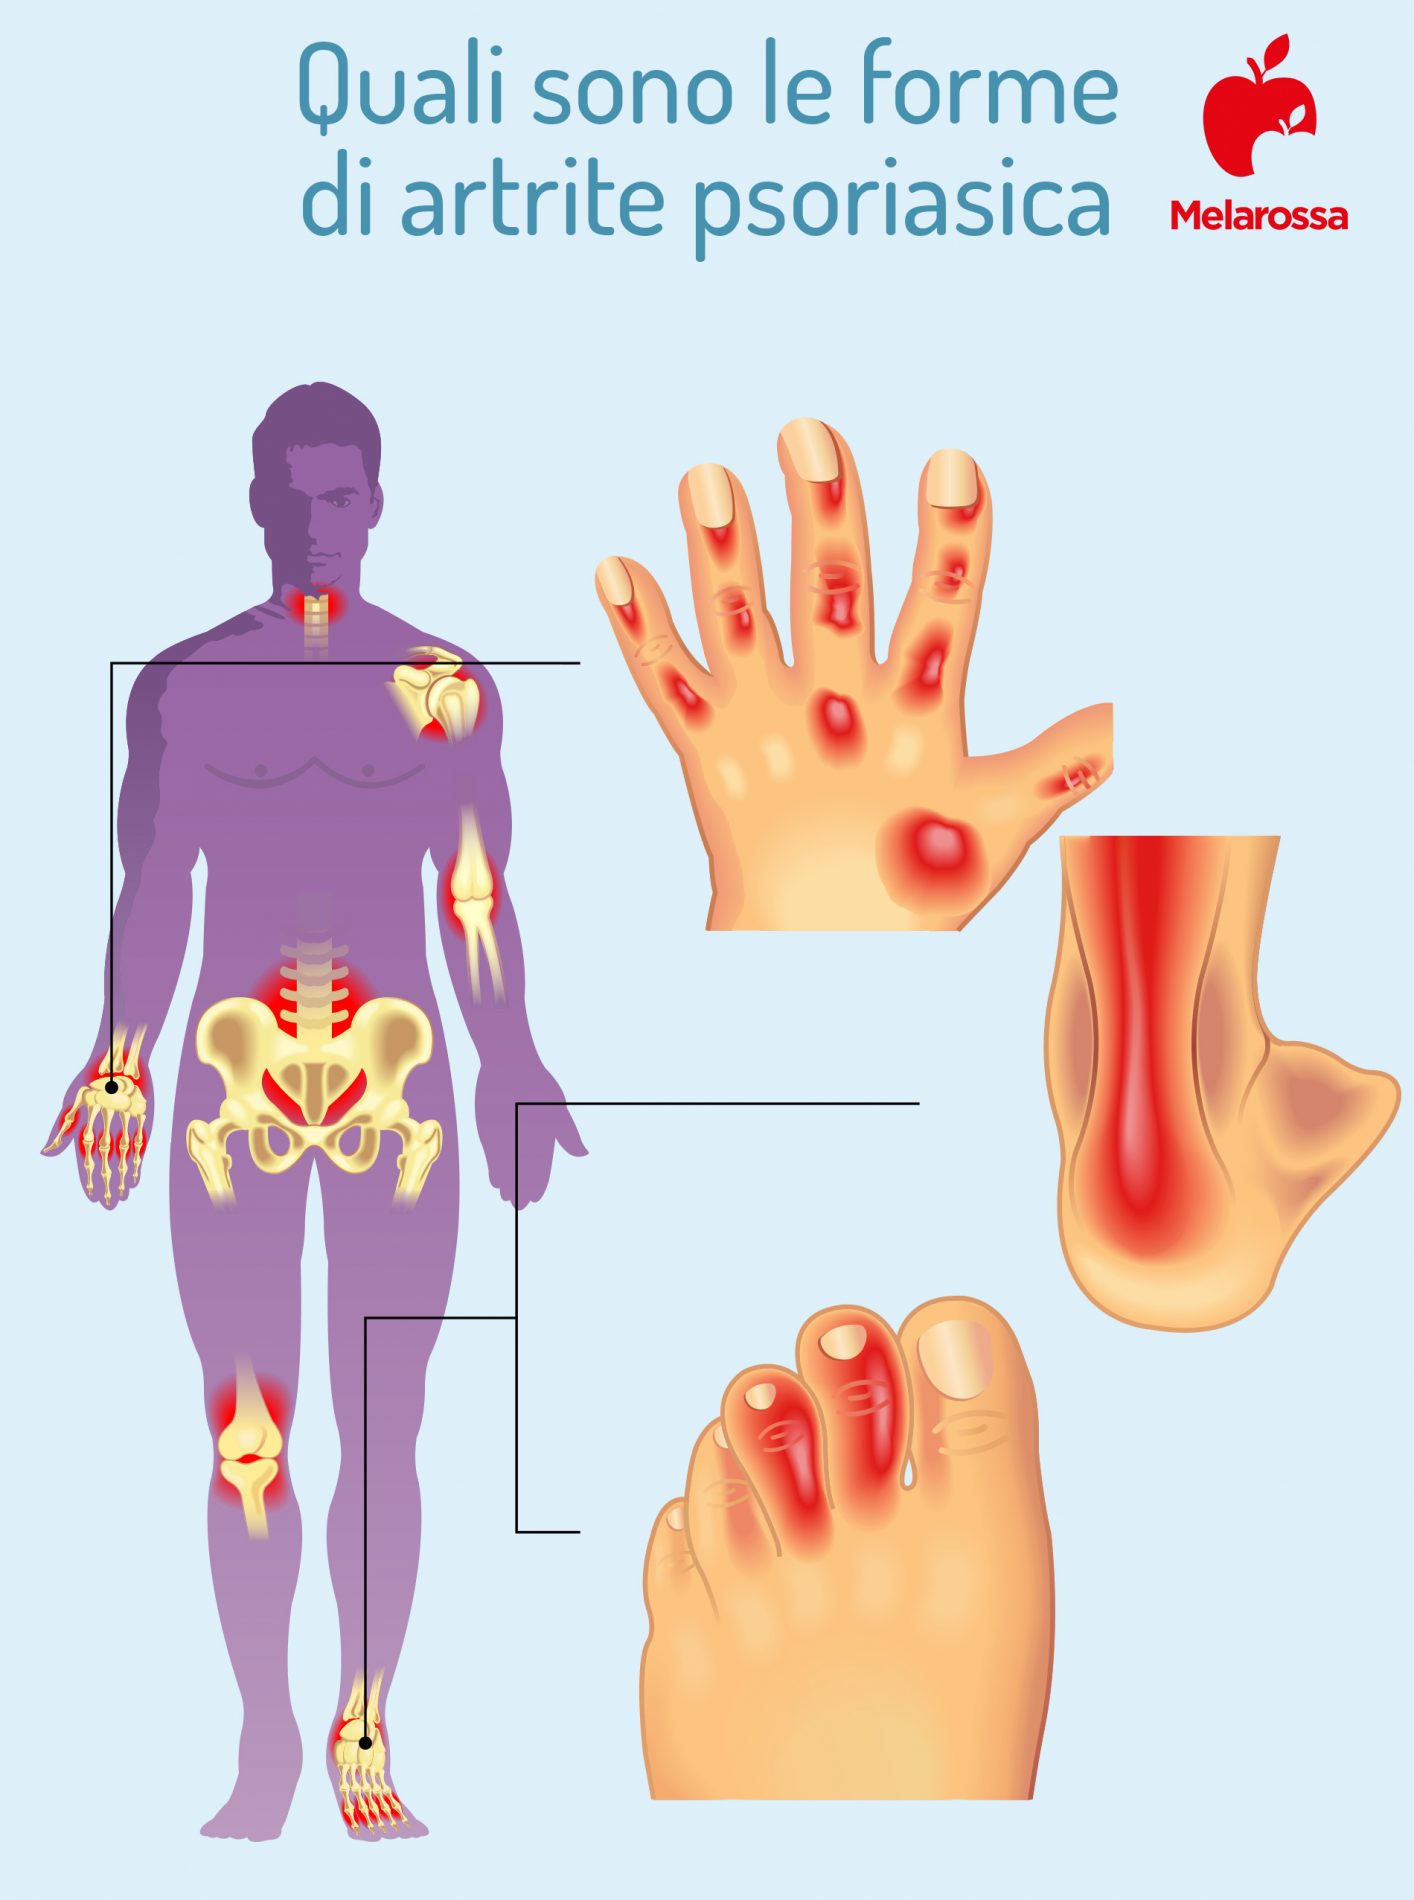 artrite psoriasica: forme 